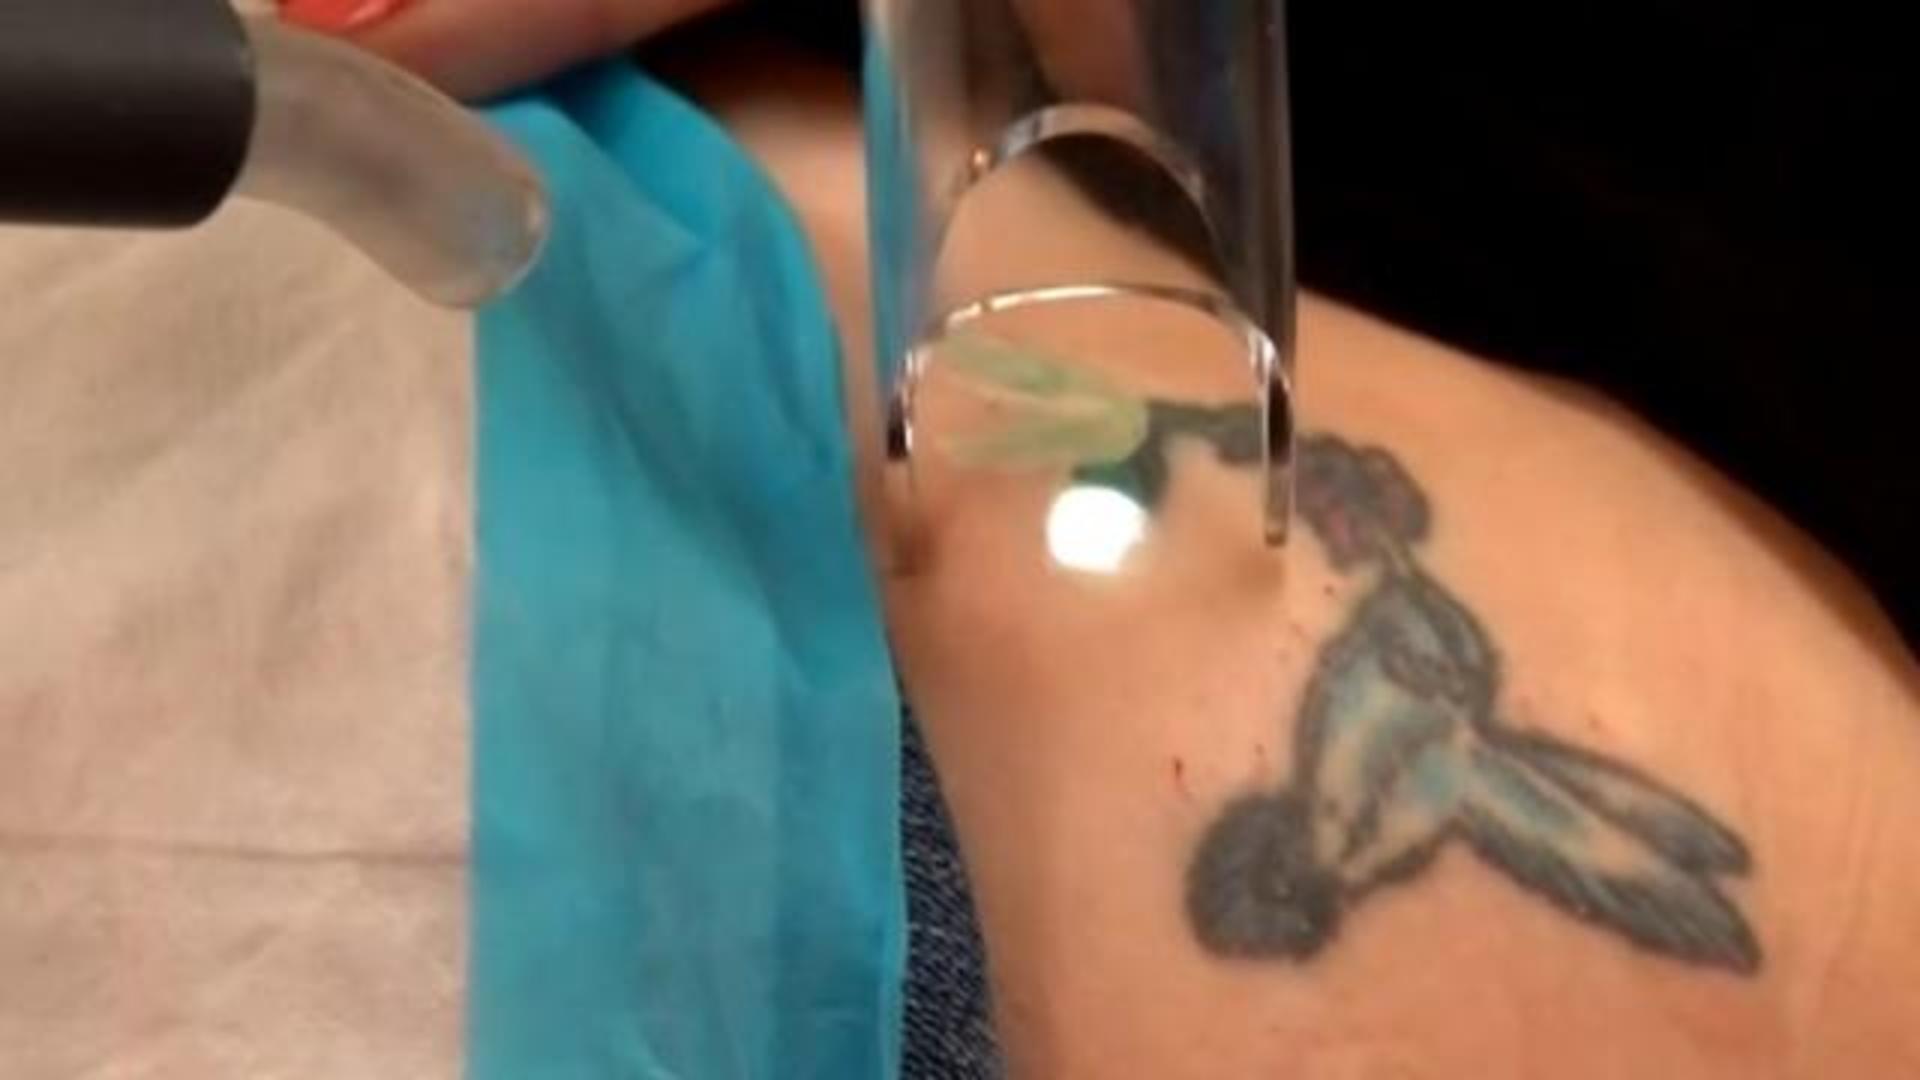 Tattoo removal procedures spike post-pandemic - CBS News